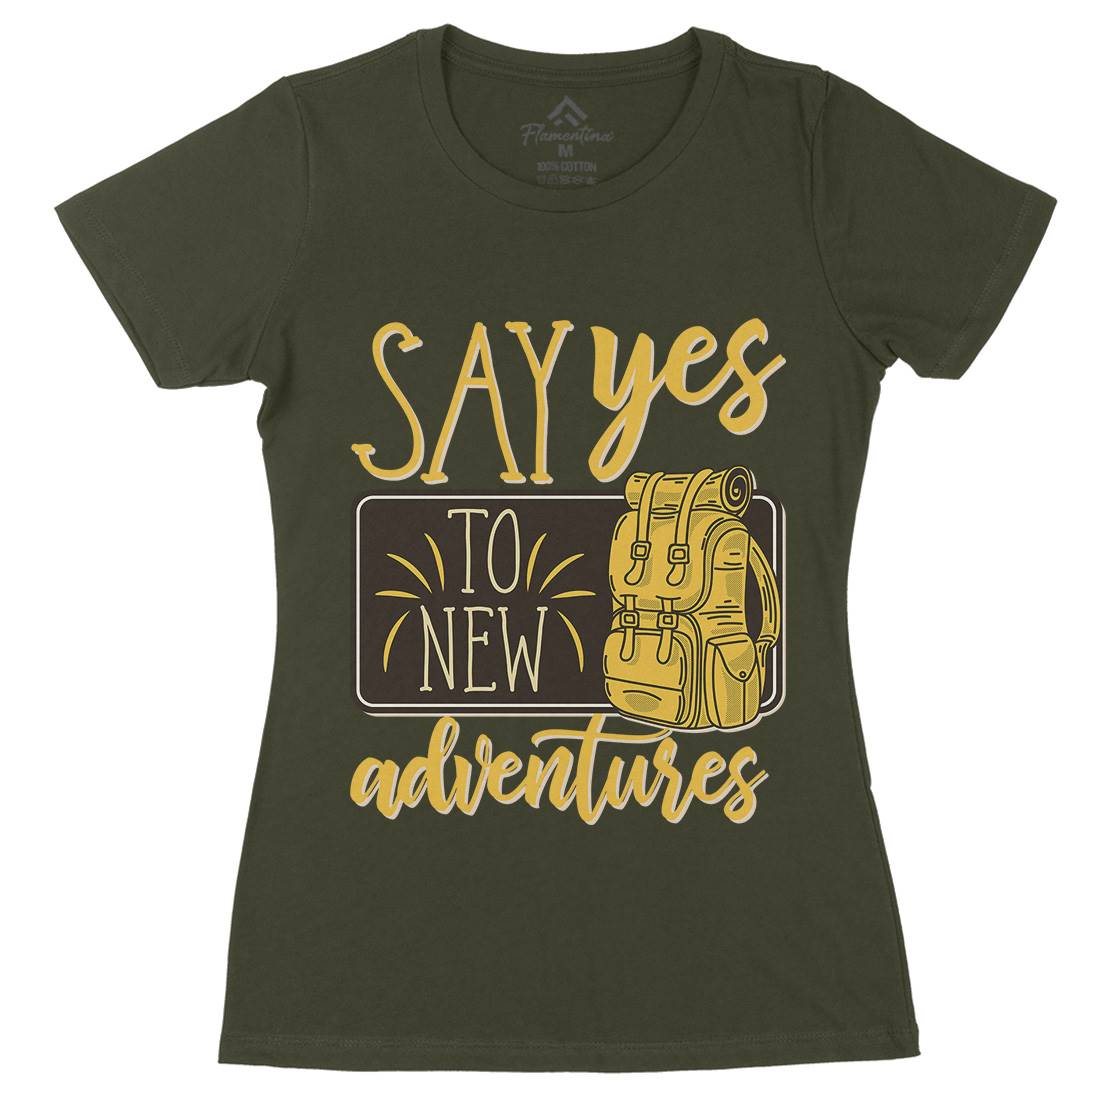 New Adventures Womens Organic Crew Neck T-Shirt Nature D956